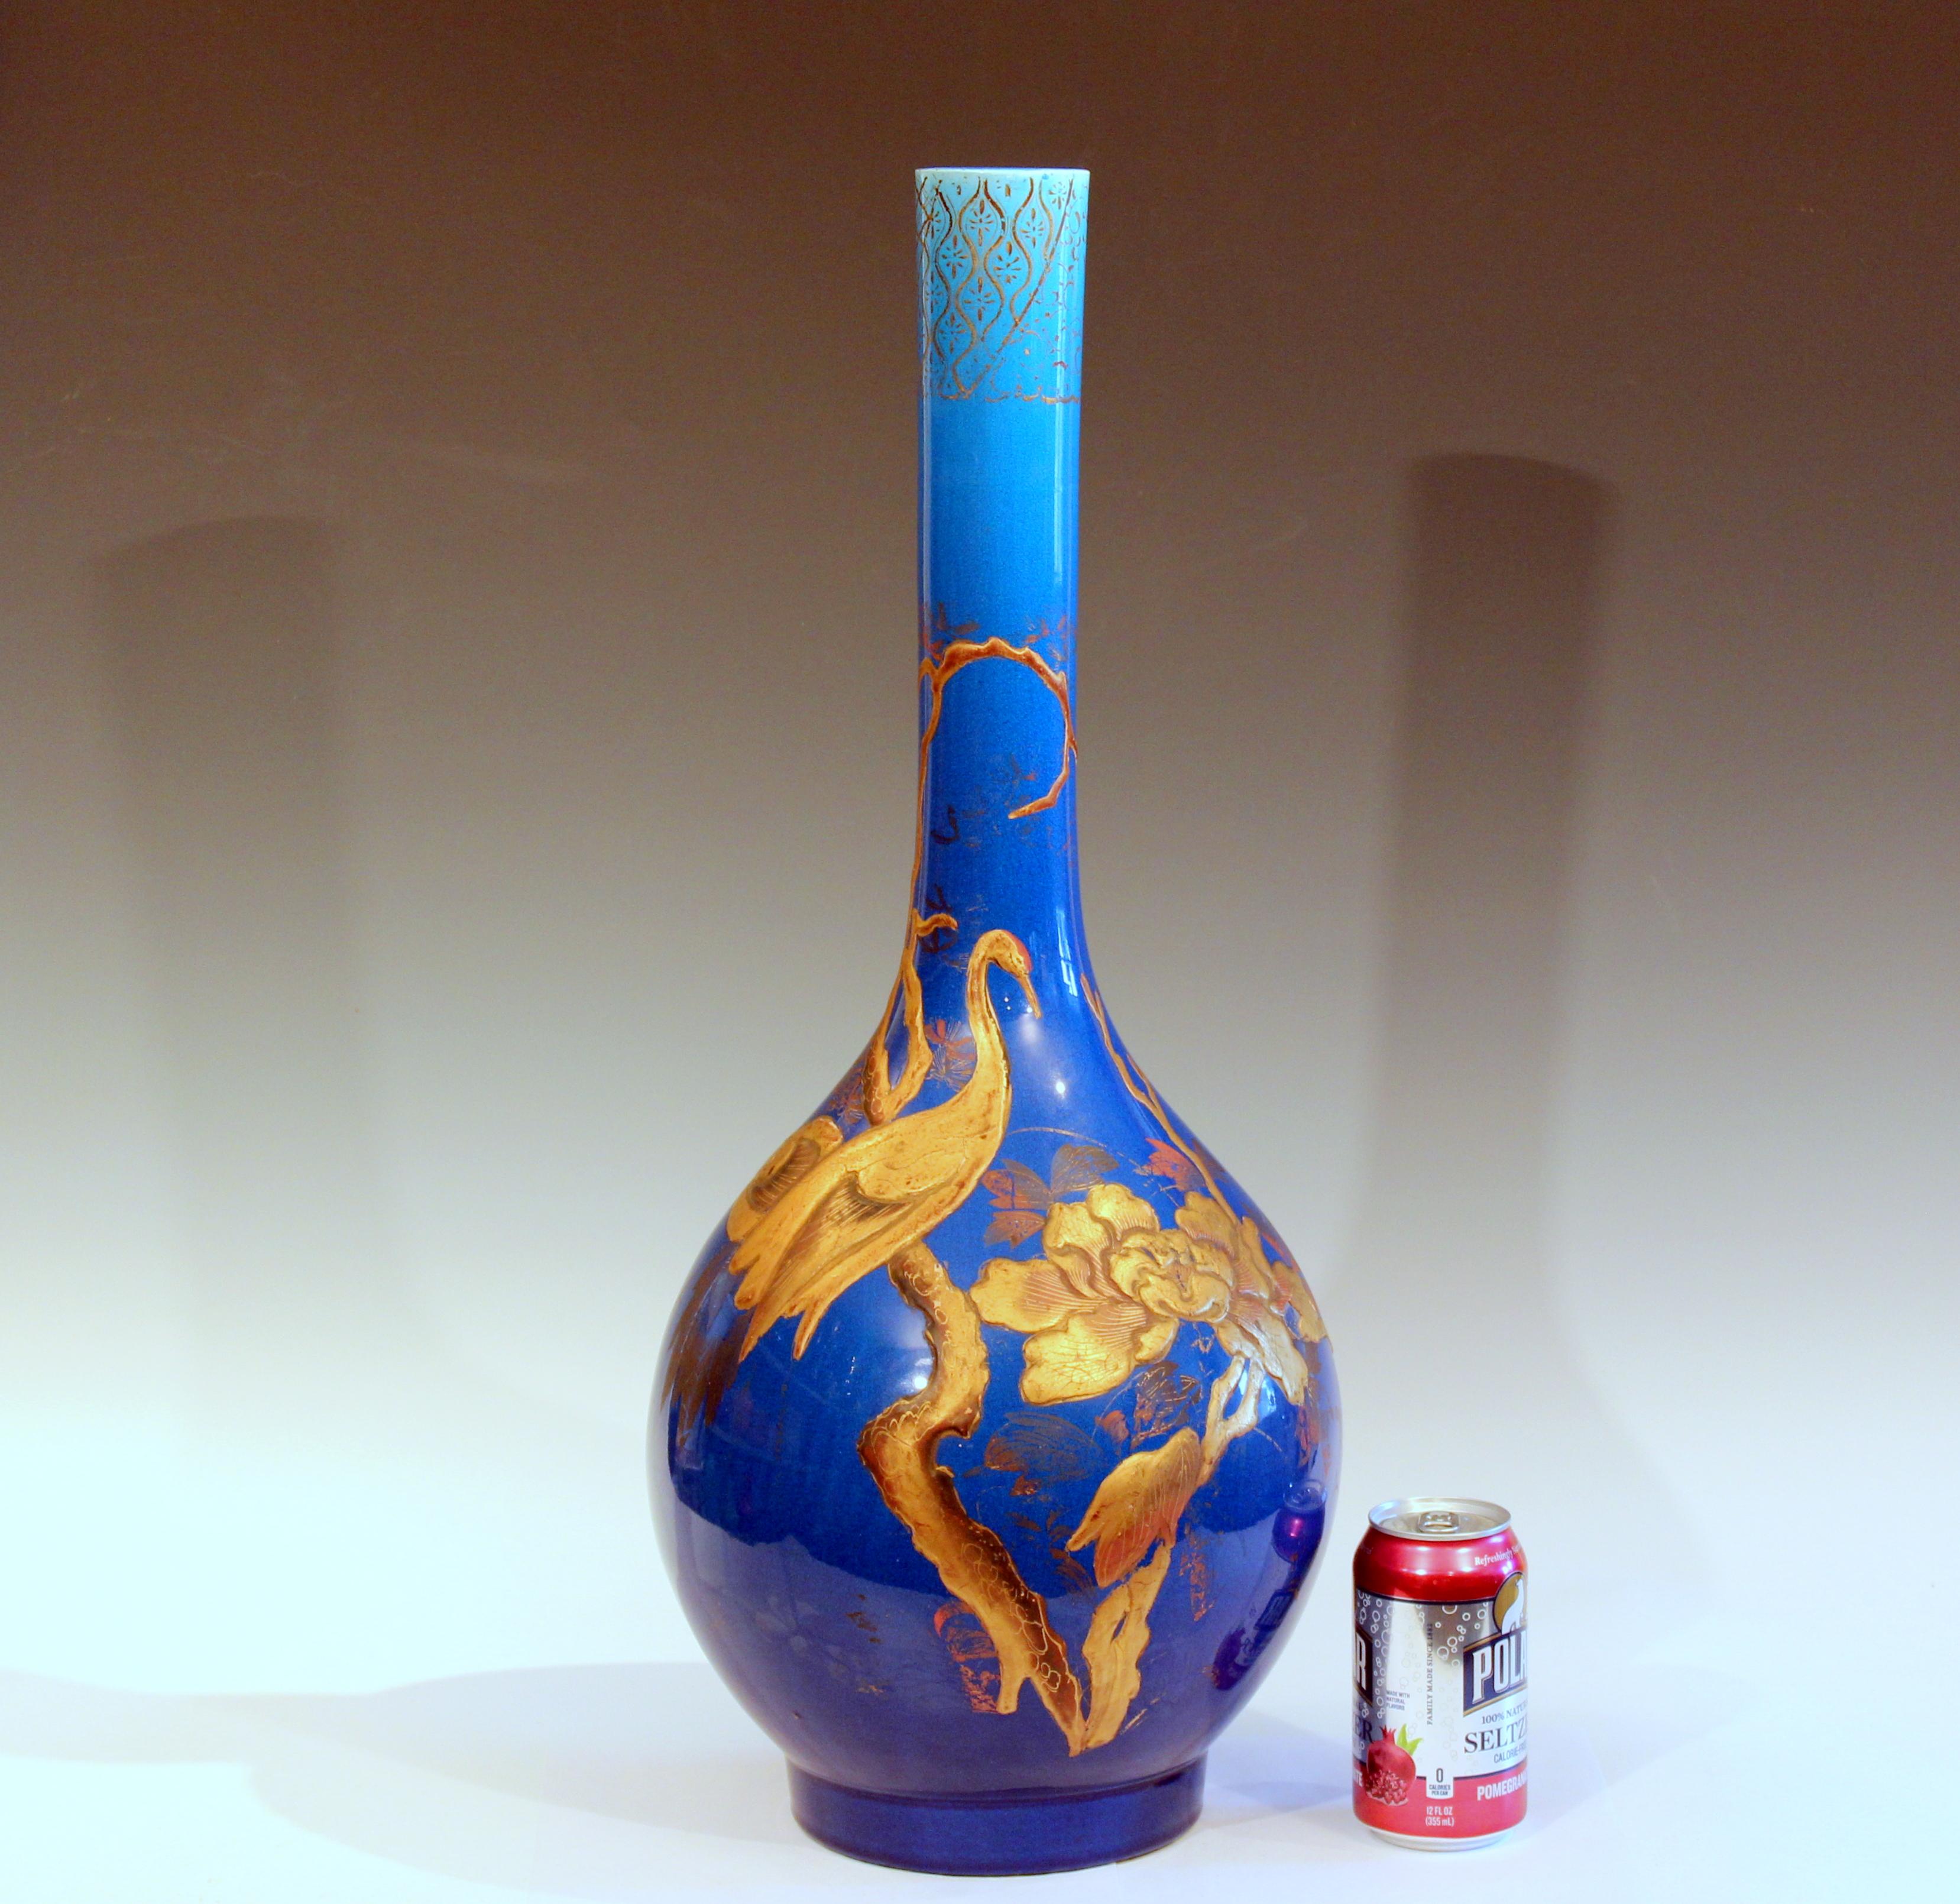 Antique Kyoto-Awaji Japanese Pottery Bottle Vase with Lacquer Decoration 1